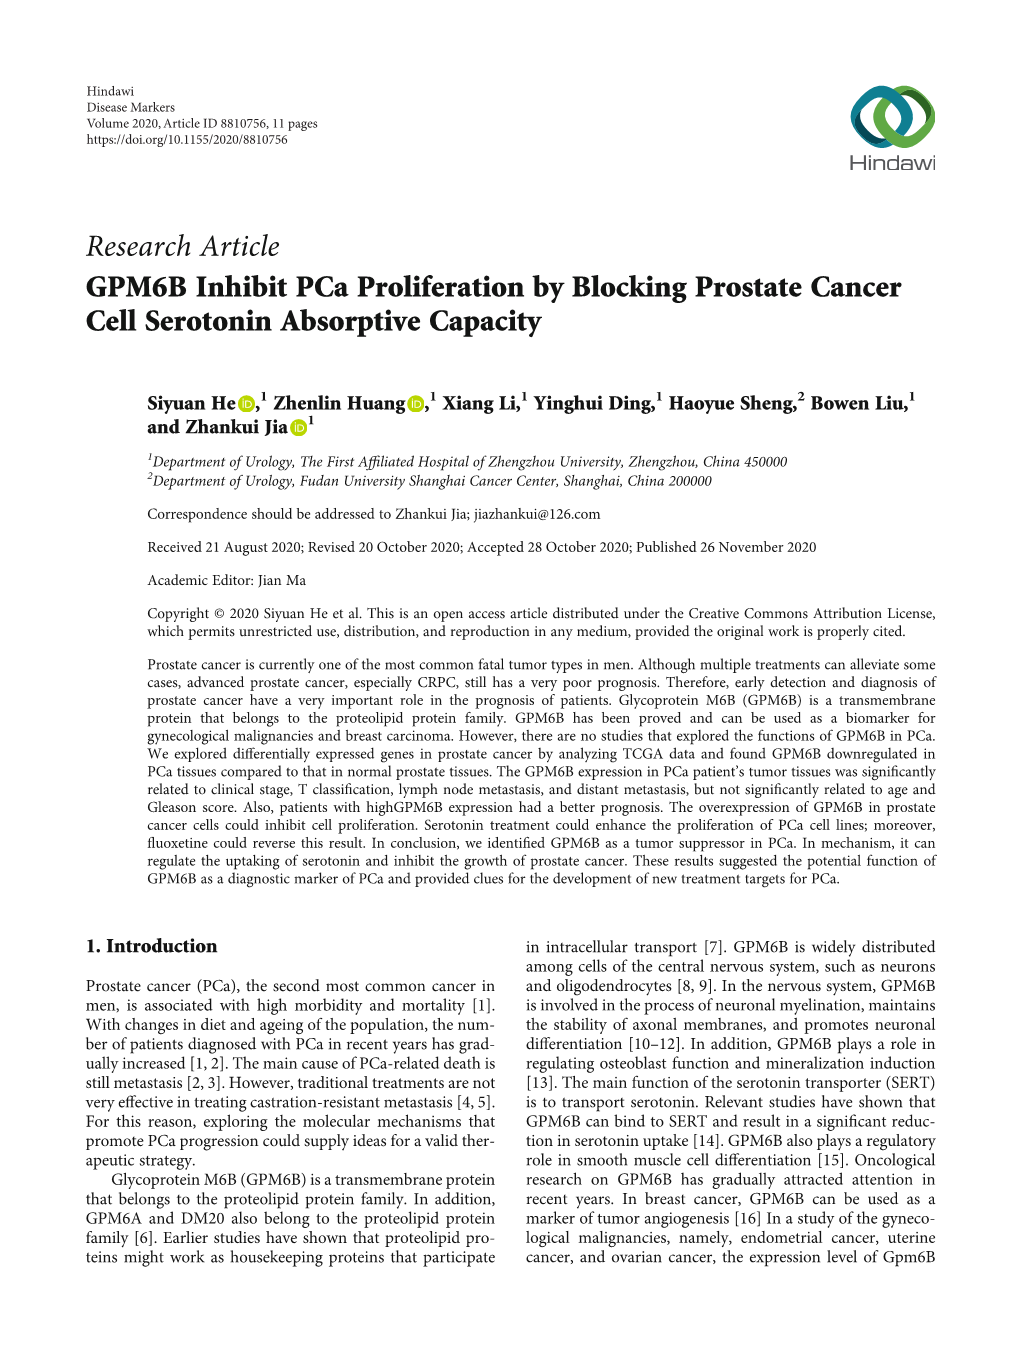 GPM6B Inhibit Pca Proliferation by Blocking Prostate Cancer Cell Serotonin Absorptive Capacity